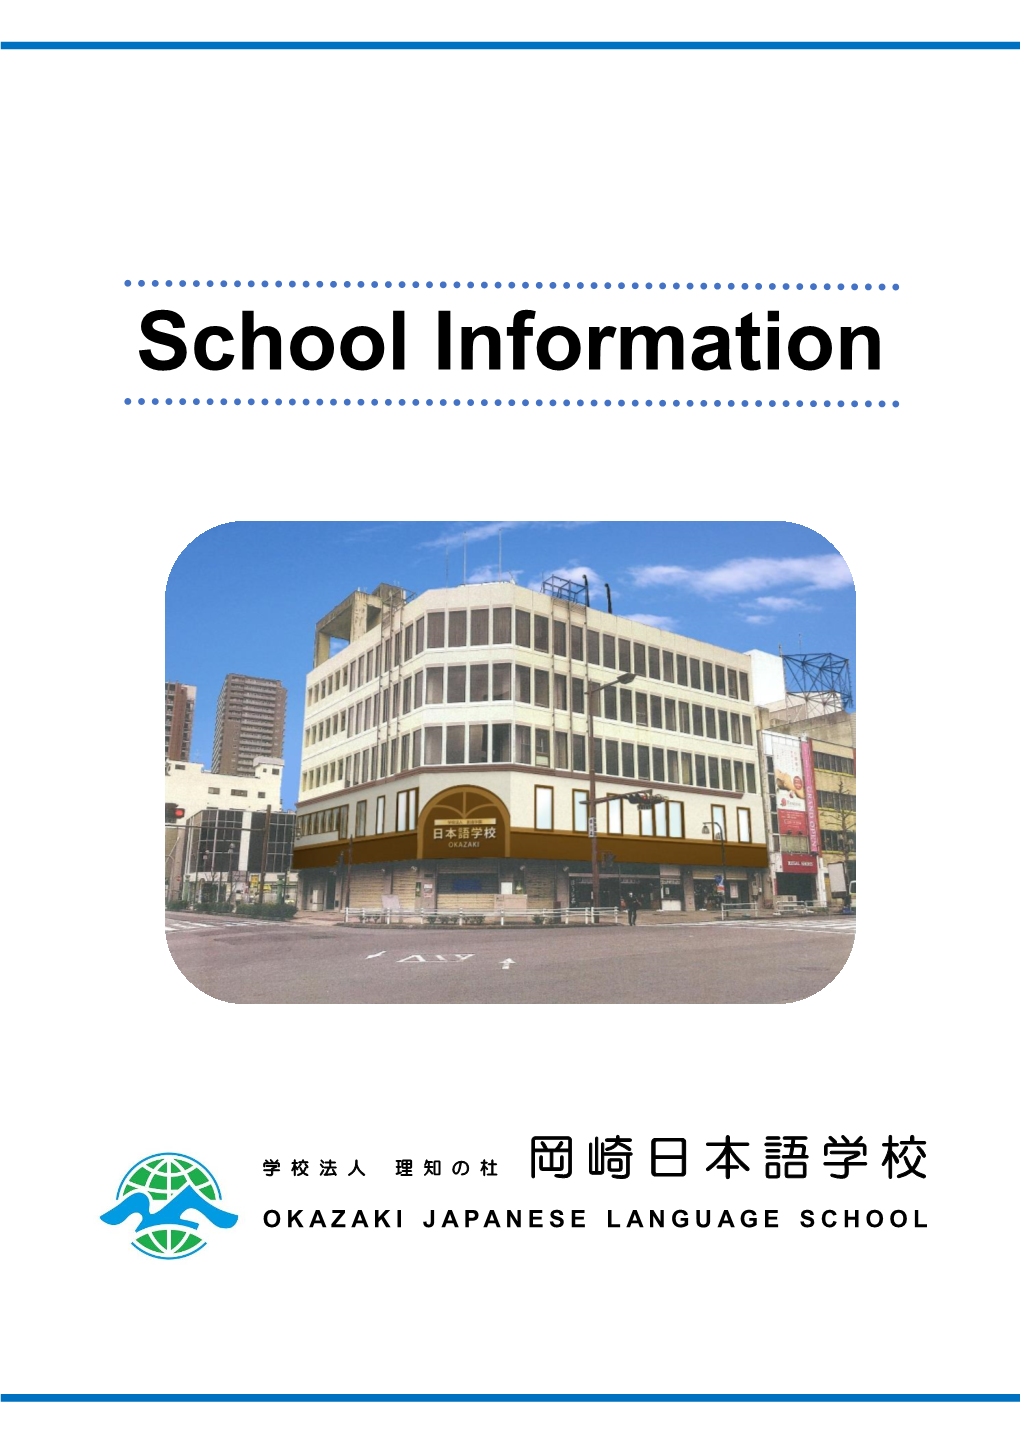 The Location of Okazaki Japanese Language School